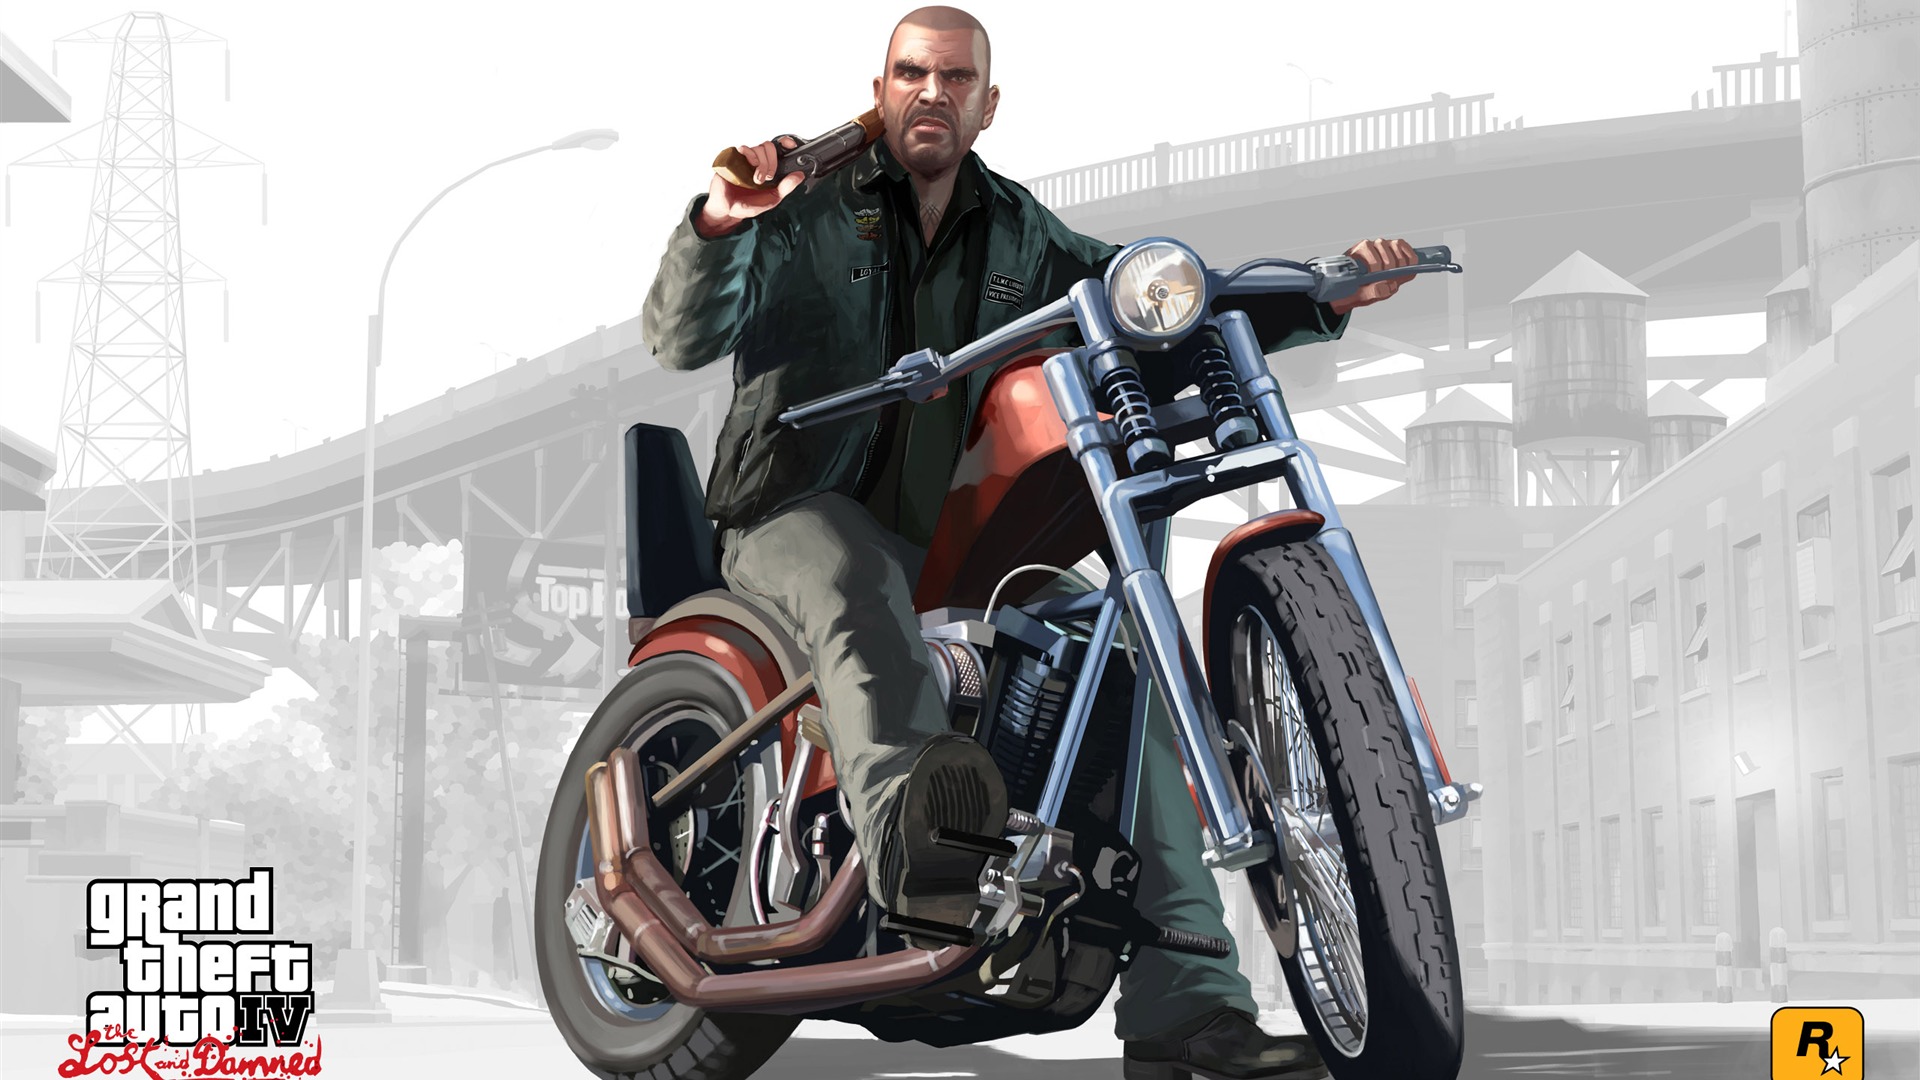 Grand Theft Auto: Vice City wallpaper HD #19 - 1920x1080